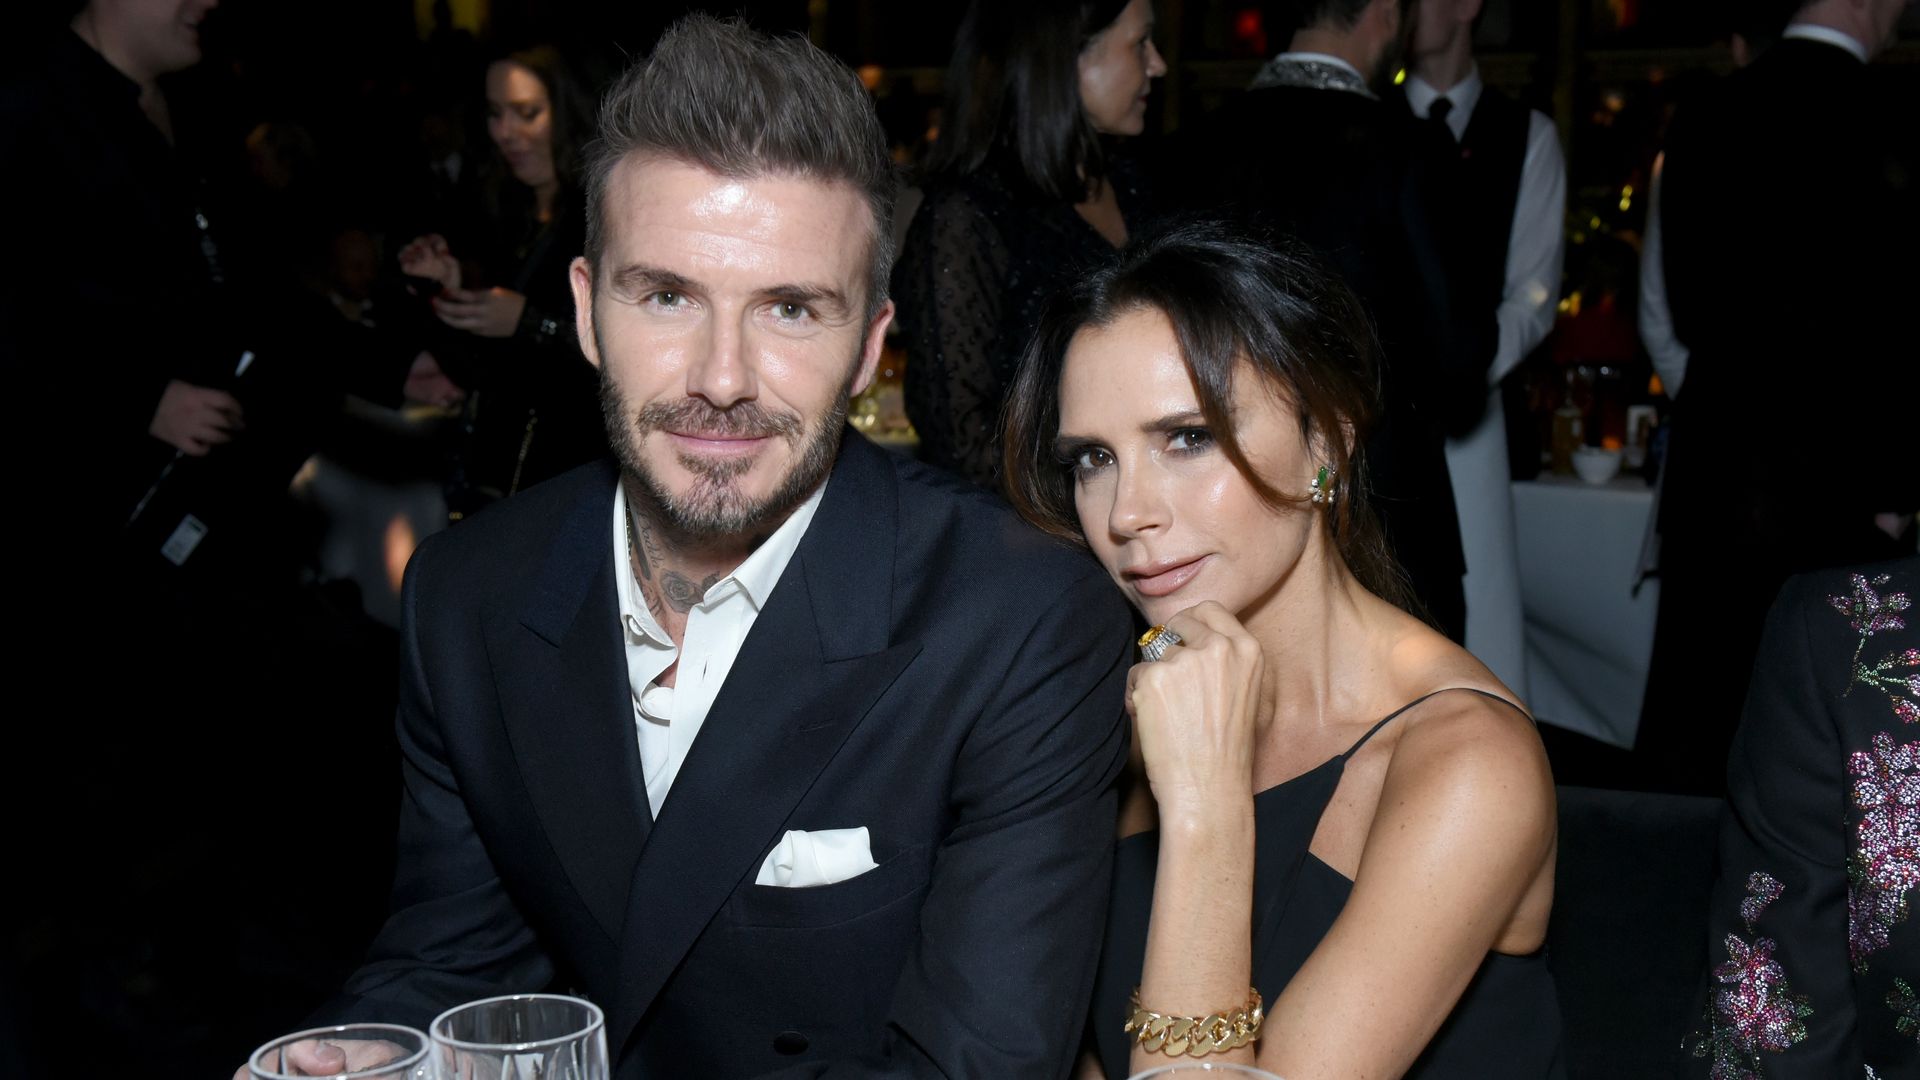 David and Victoria Beckham sat at a table at an event, smiling at the camera